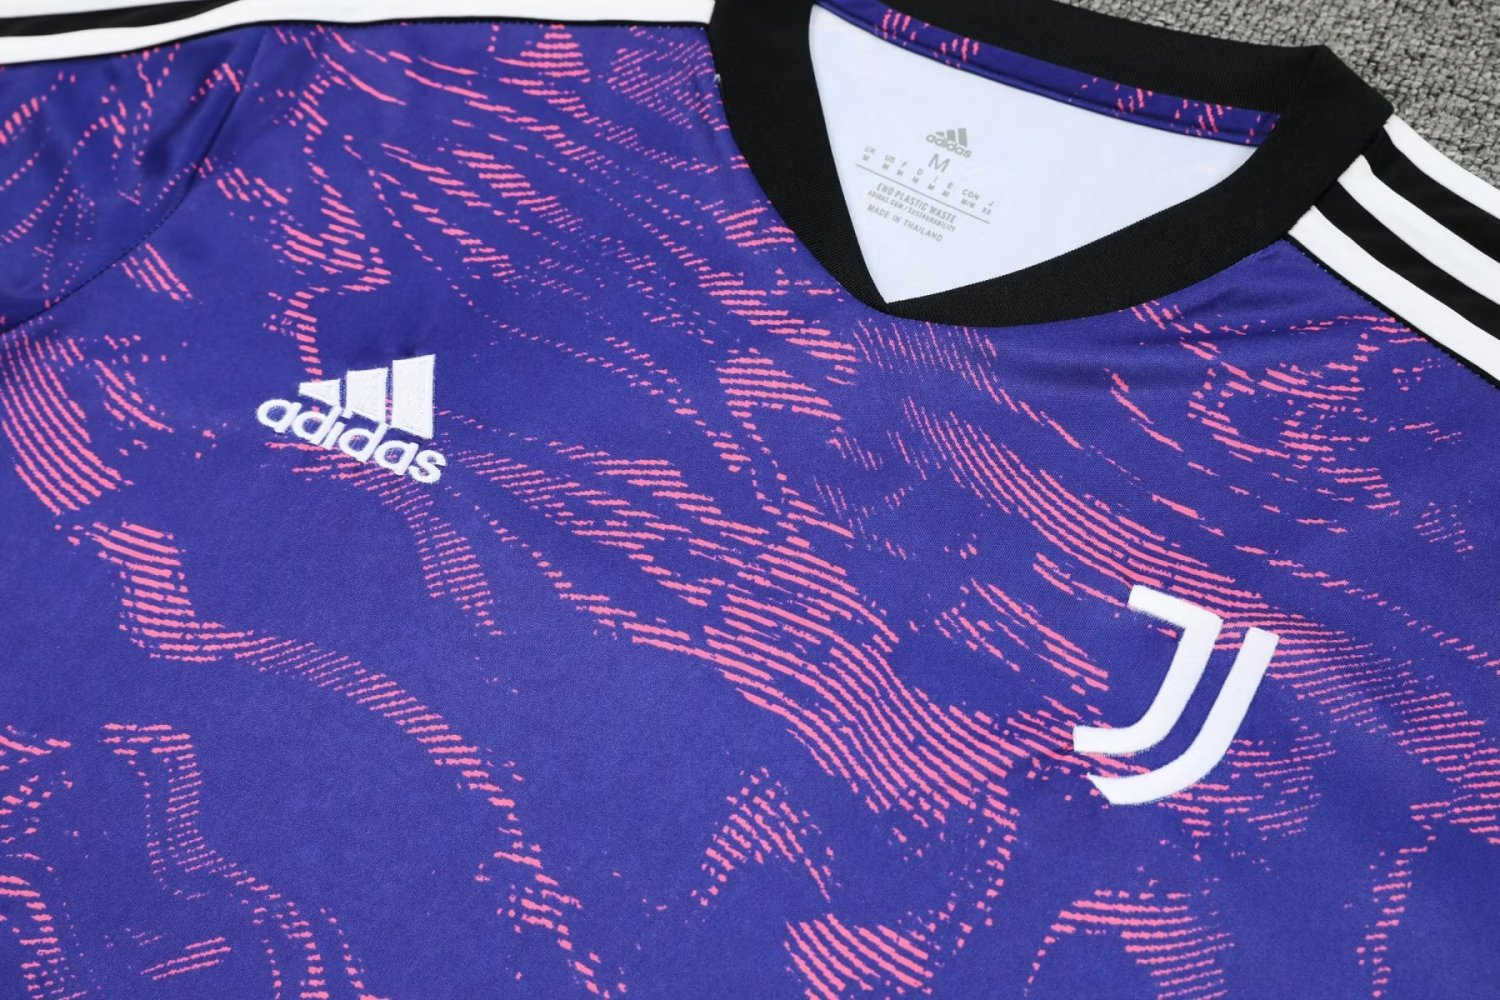 Juventus Soccer Jersey + Short Replica Purple 2023/24 Mens